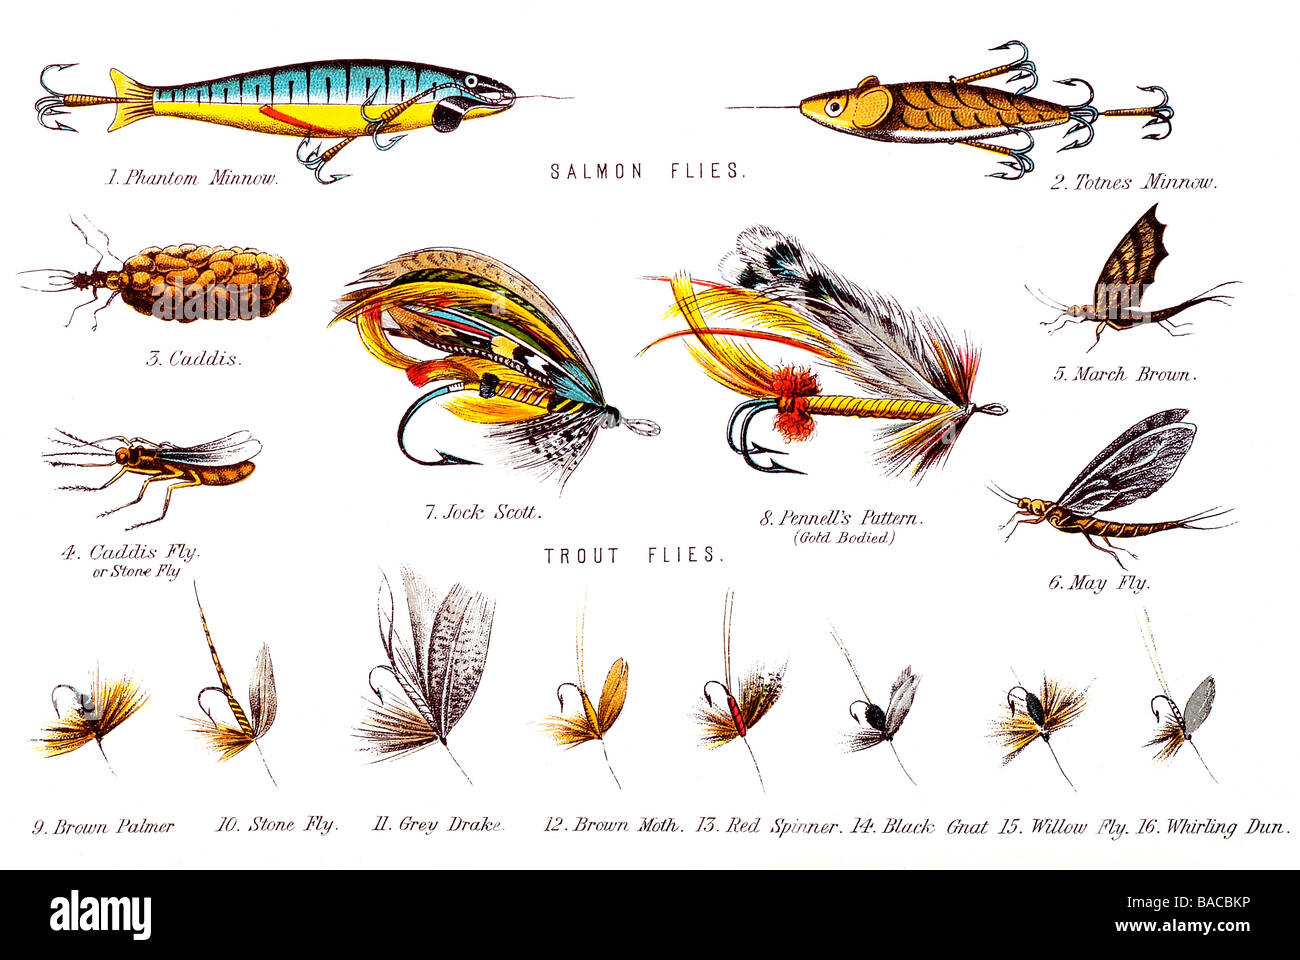 https://c8.alamy.com/comp/BACBKP/salmon-flies-trout-flies-artificial-fly-sport-fishing-angling-fisher-BACBKP.jpg